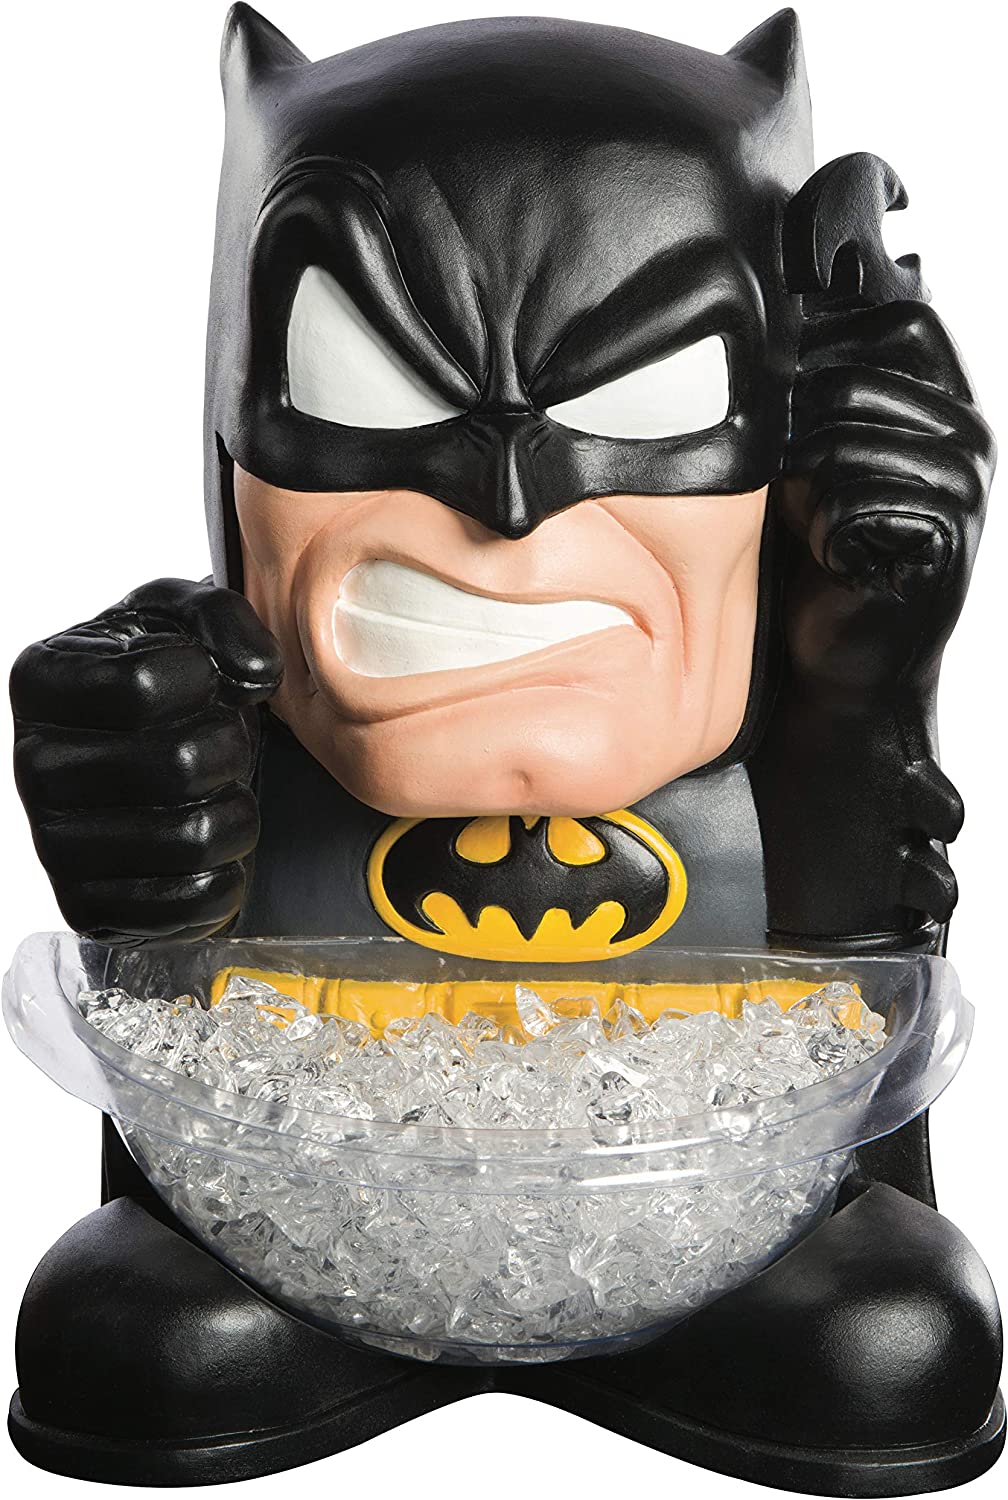 Rubies: Batman Candy Bowl Holder